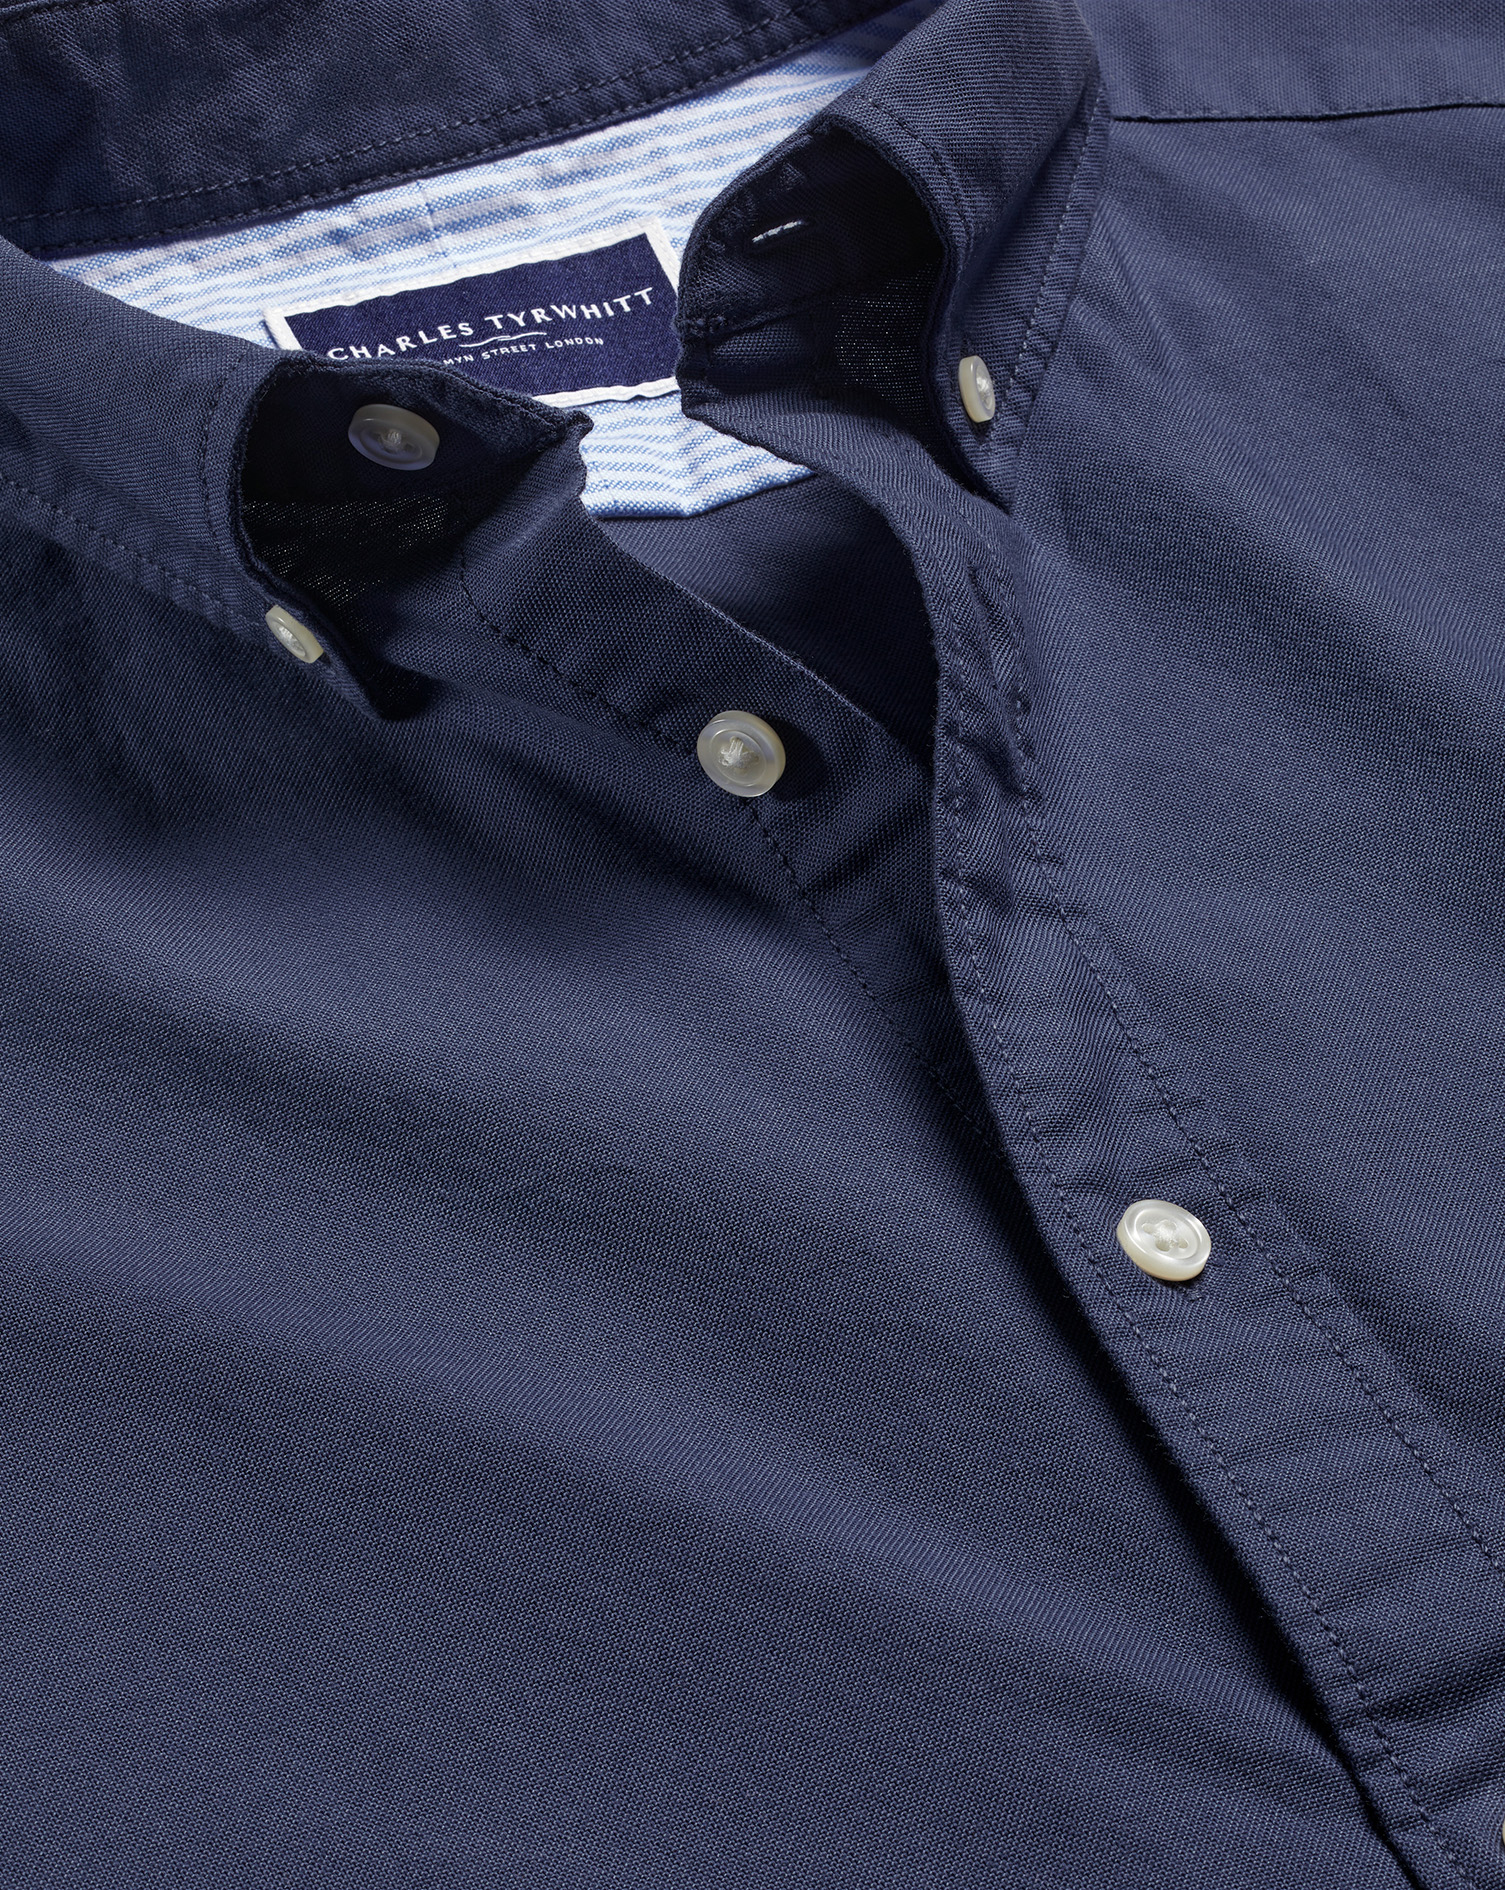 Charles Tyrwhitt Men's Button-Down Collar Casual Shirt